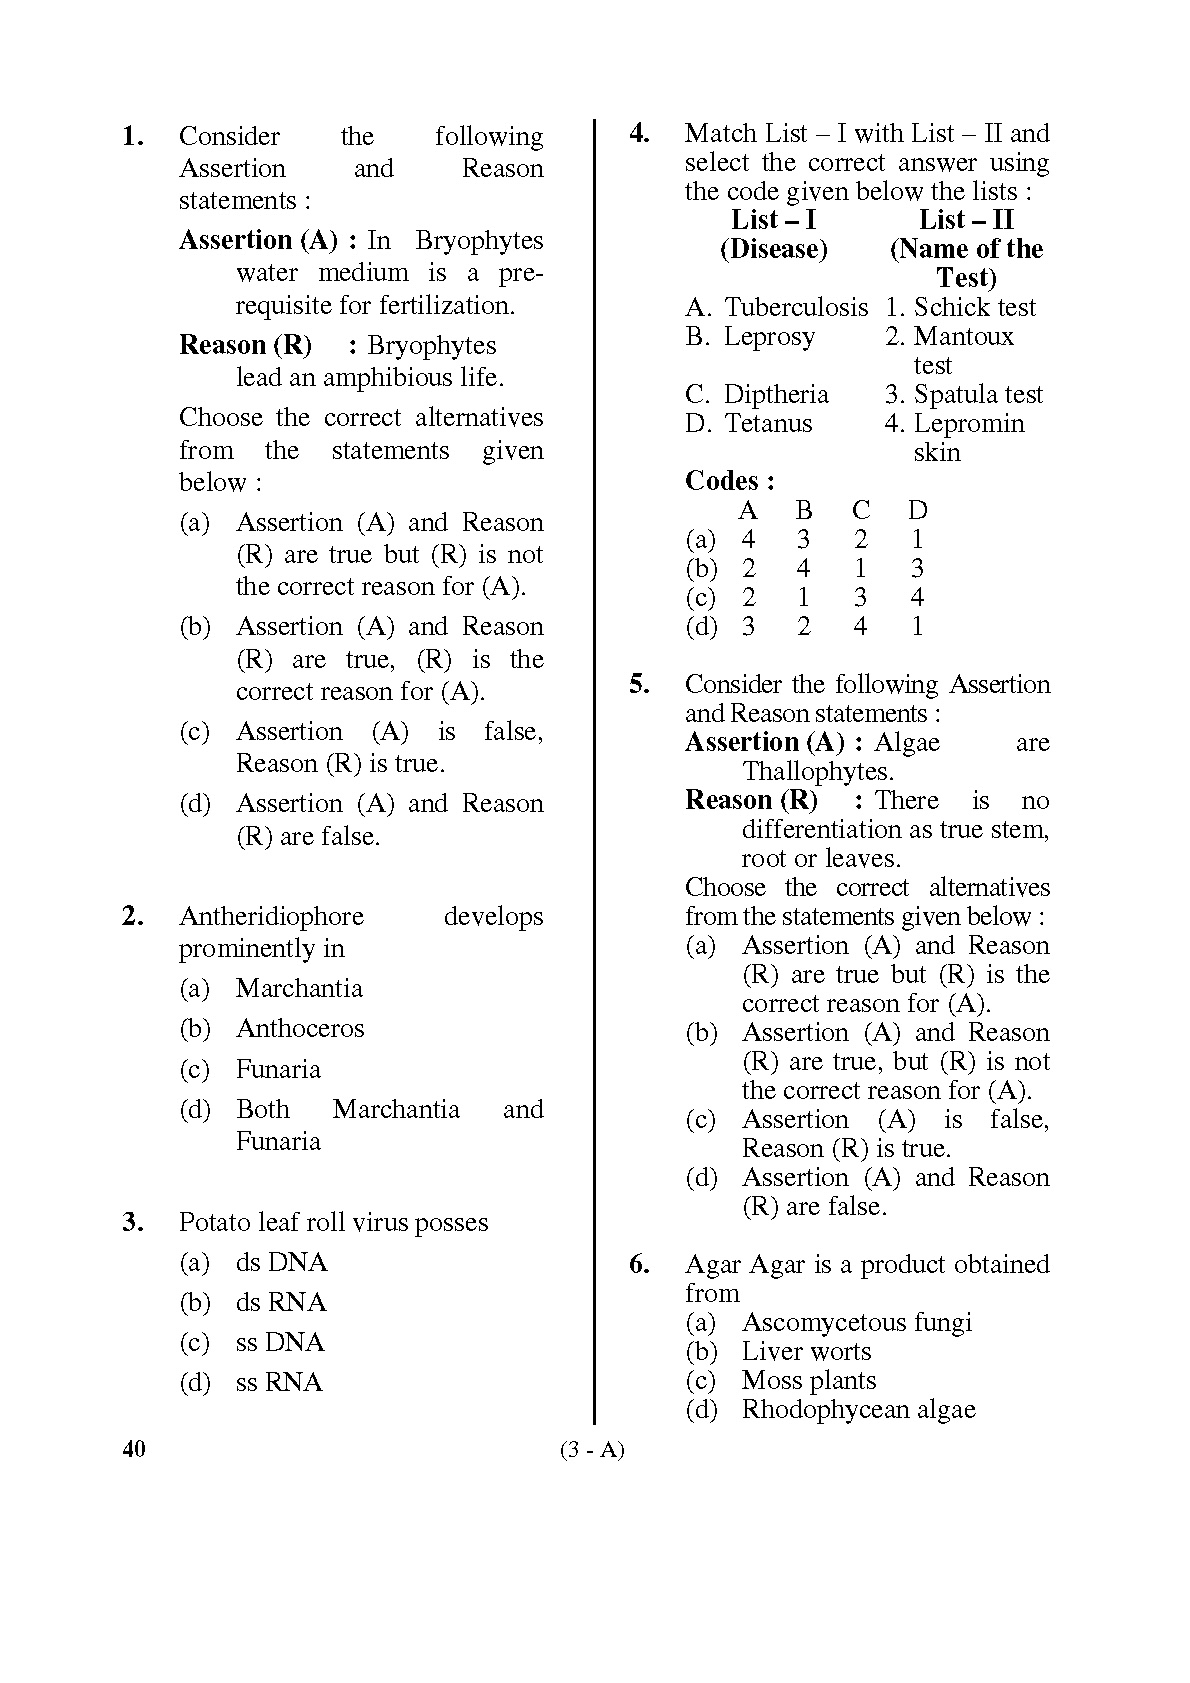 Karnataka PSC Drugs Analyst Botany Exam Sample Question Paper 3